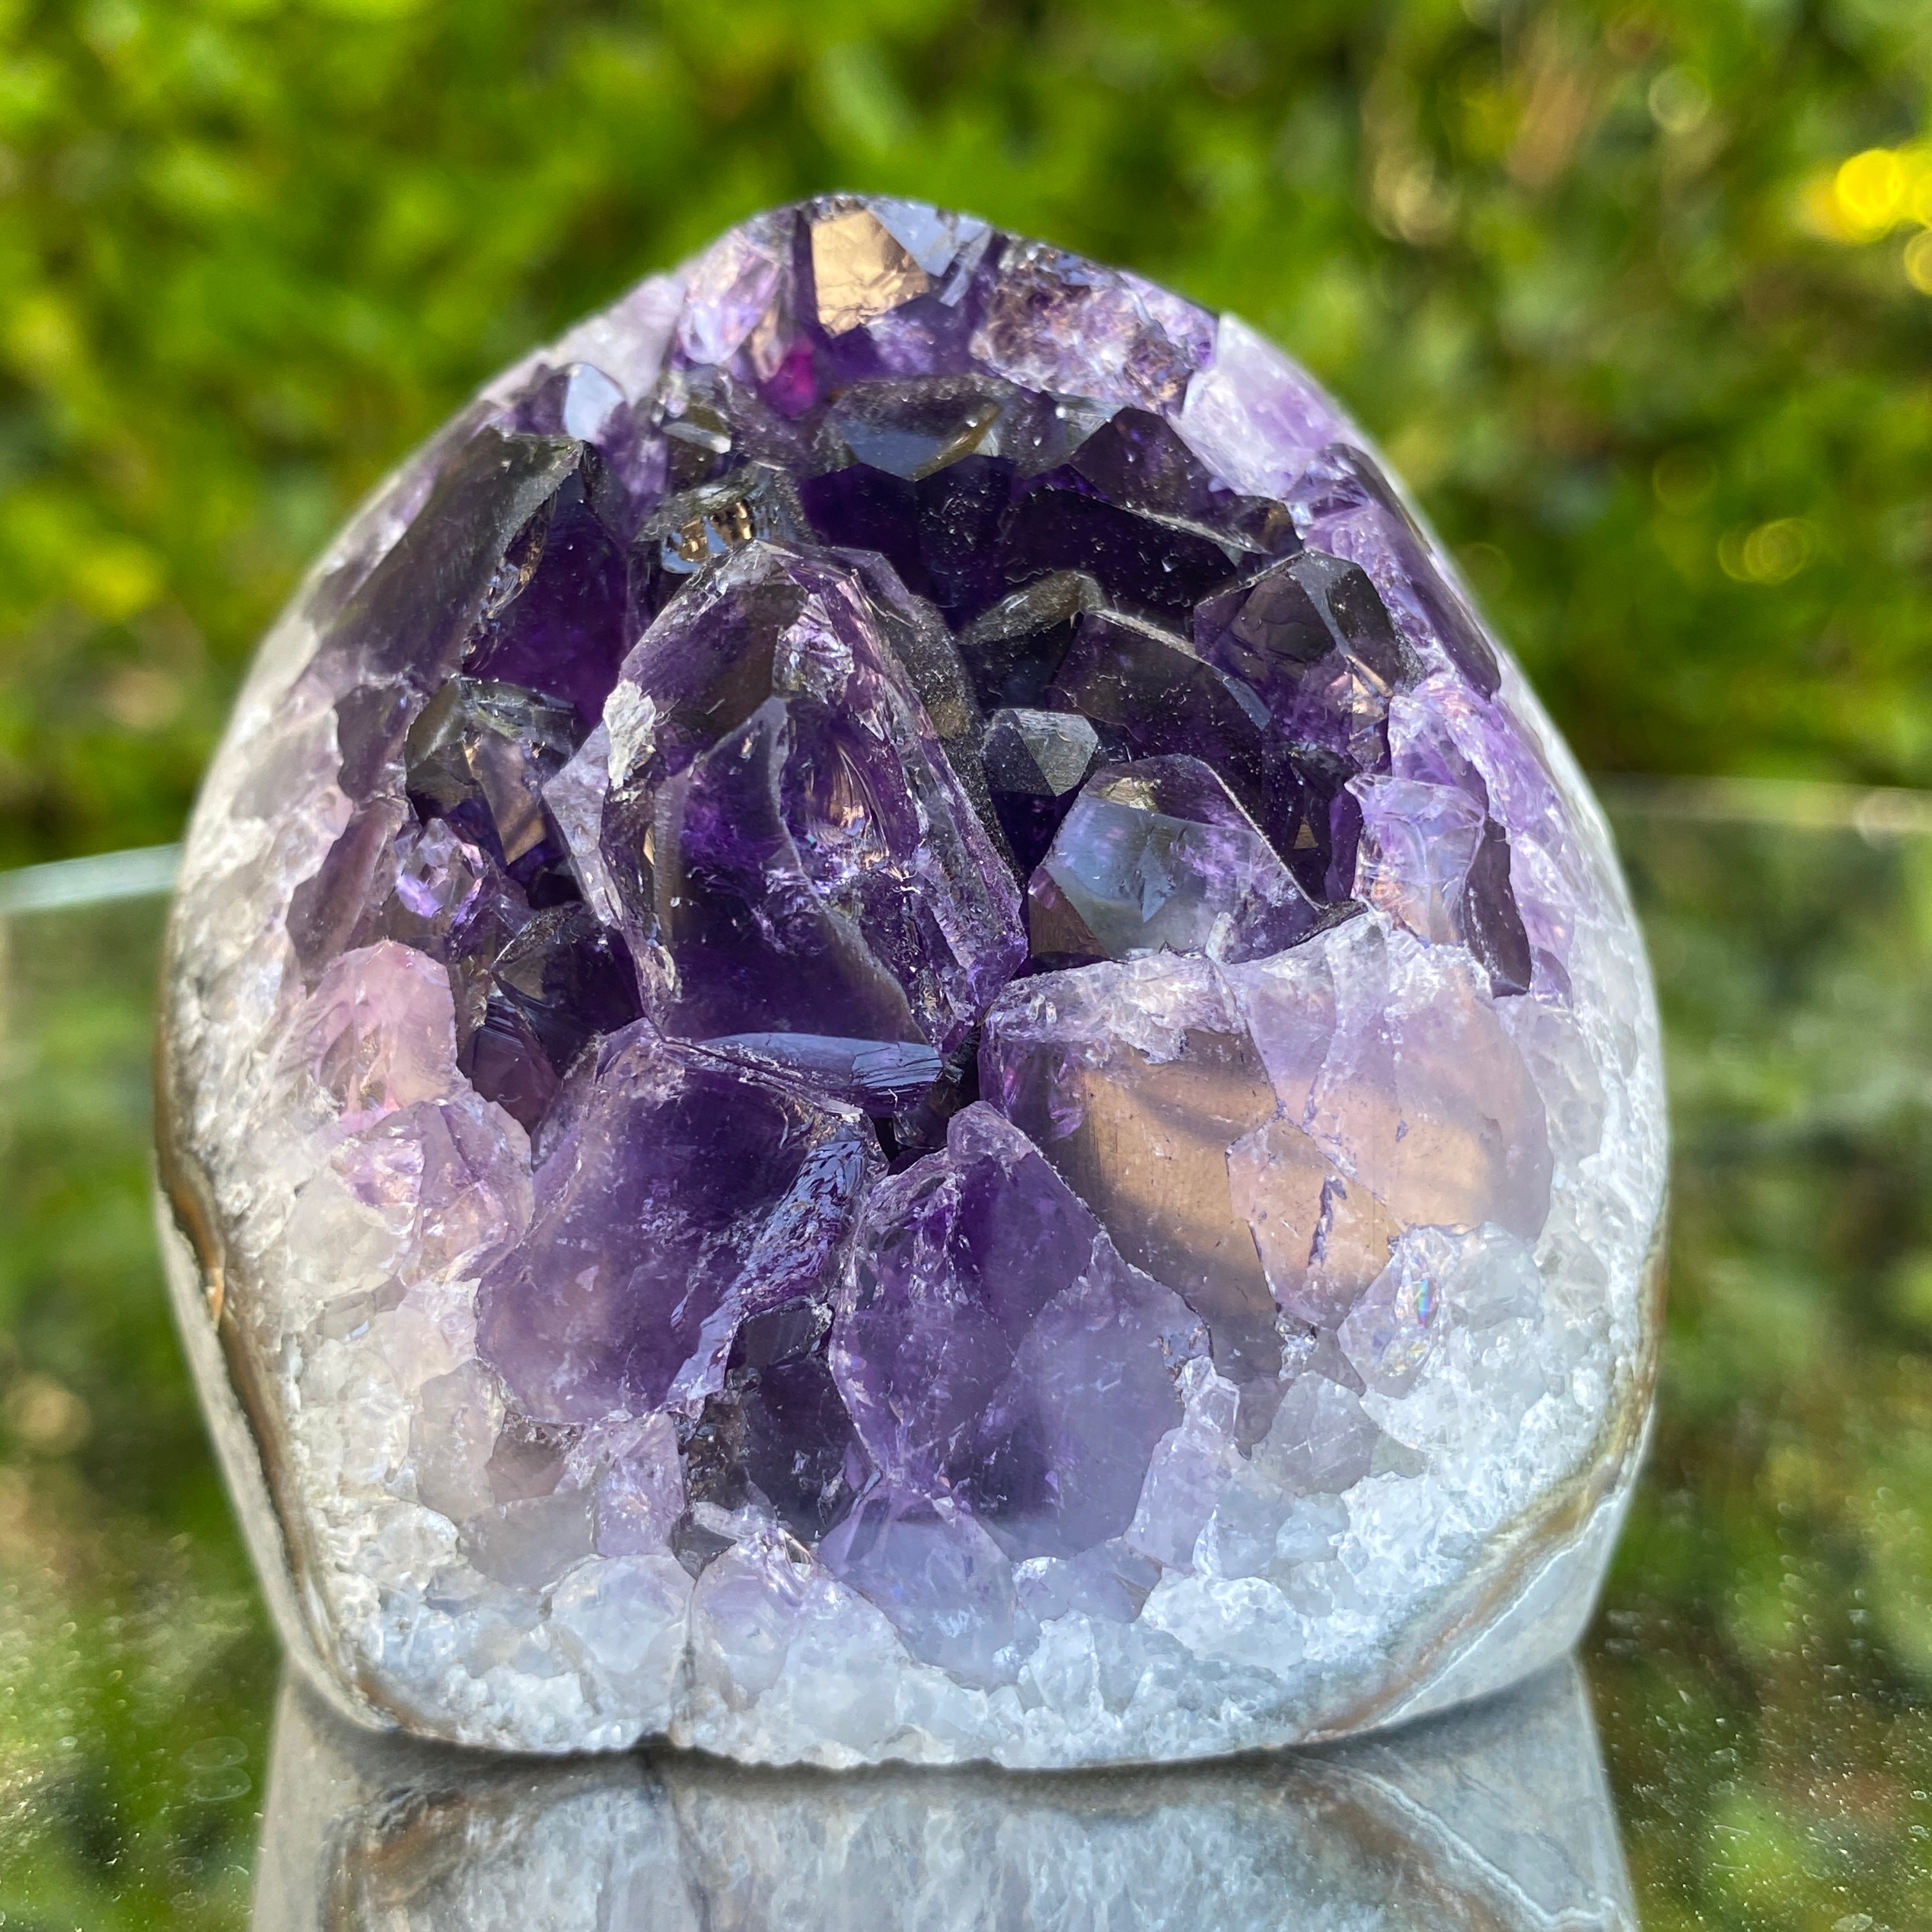 304g 7x6x6cm Grade A+ Big Smooth Crystal Purple Amethyst Geode from Uruguay